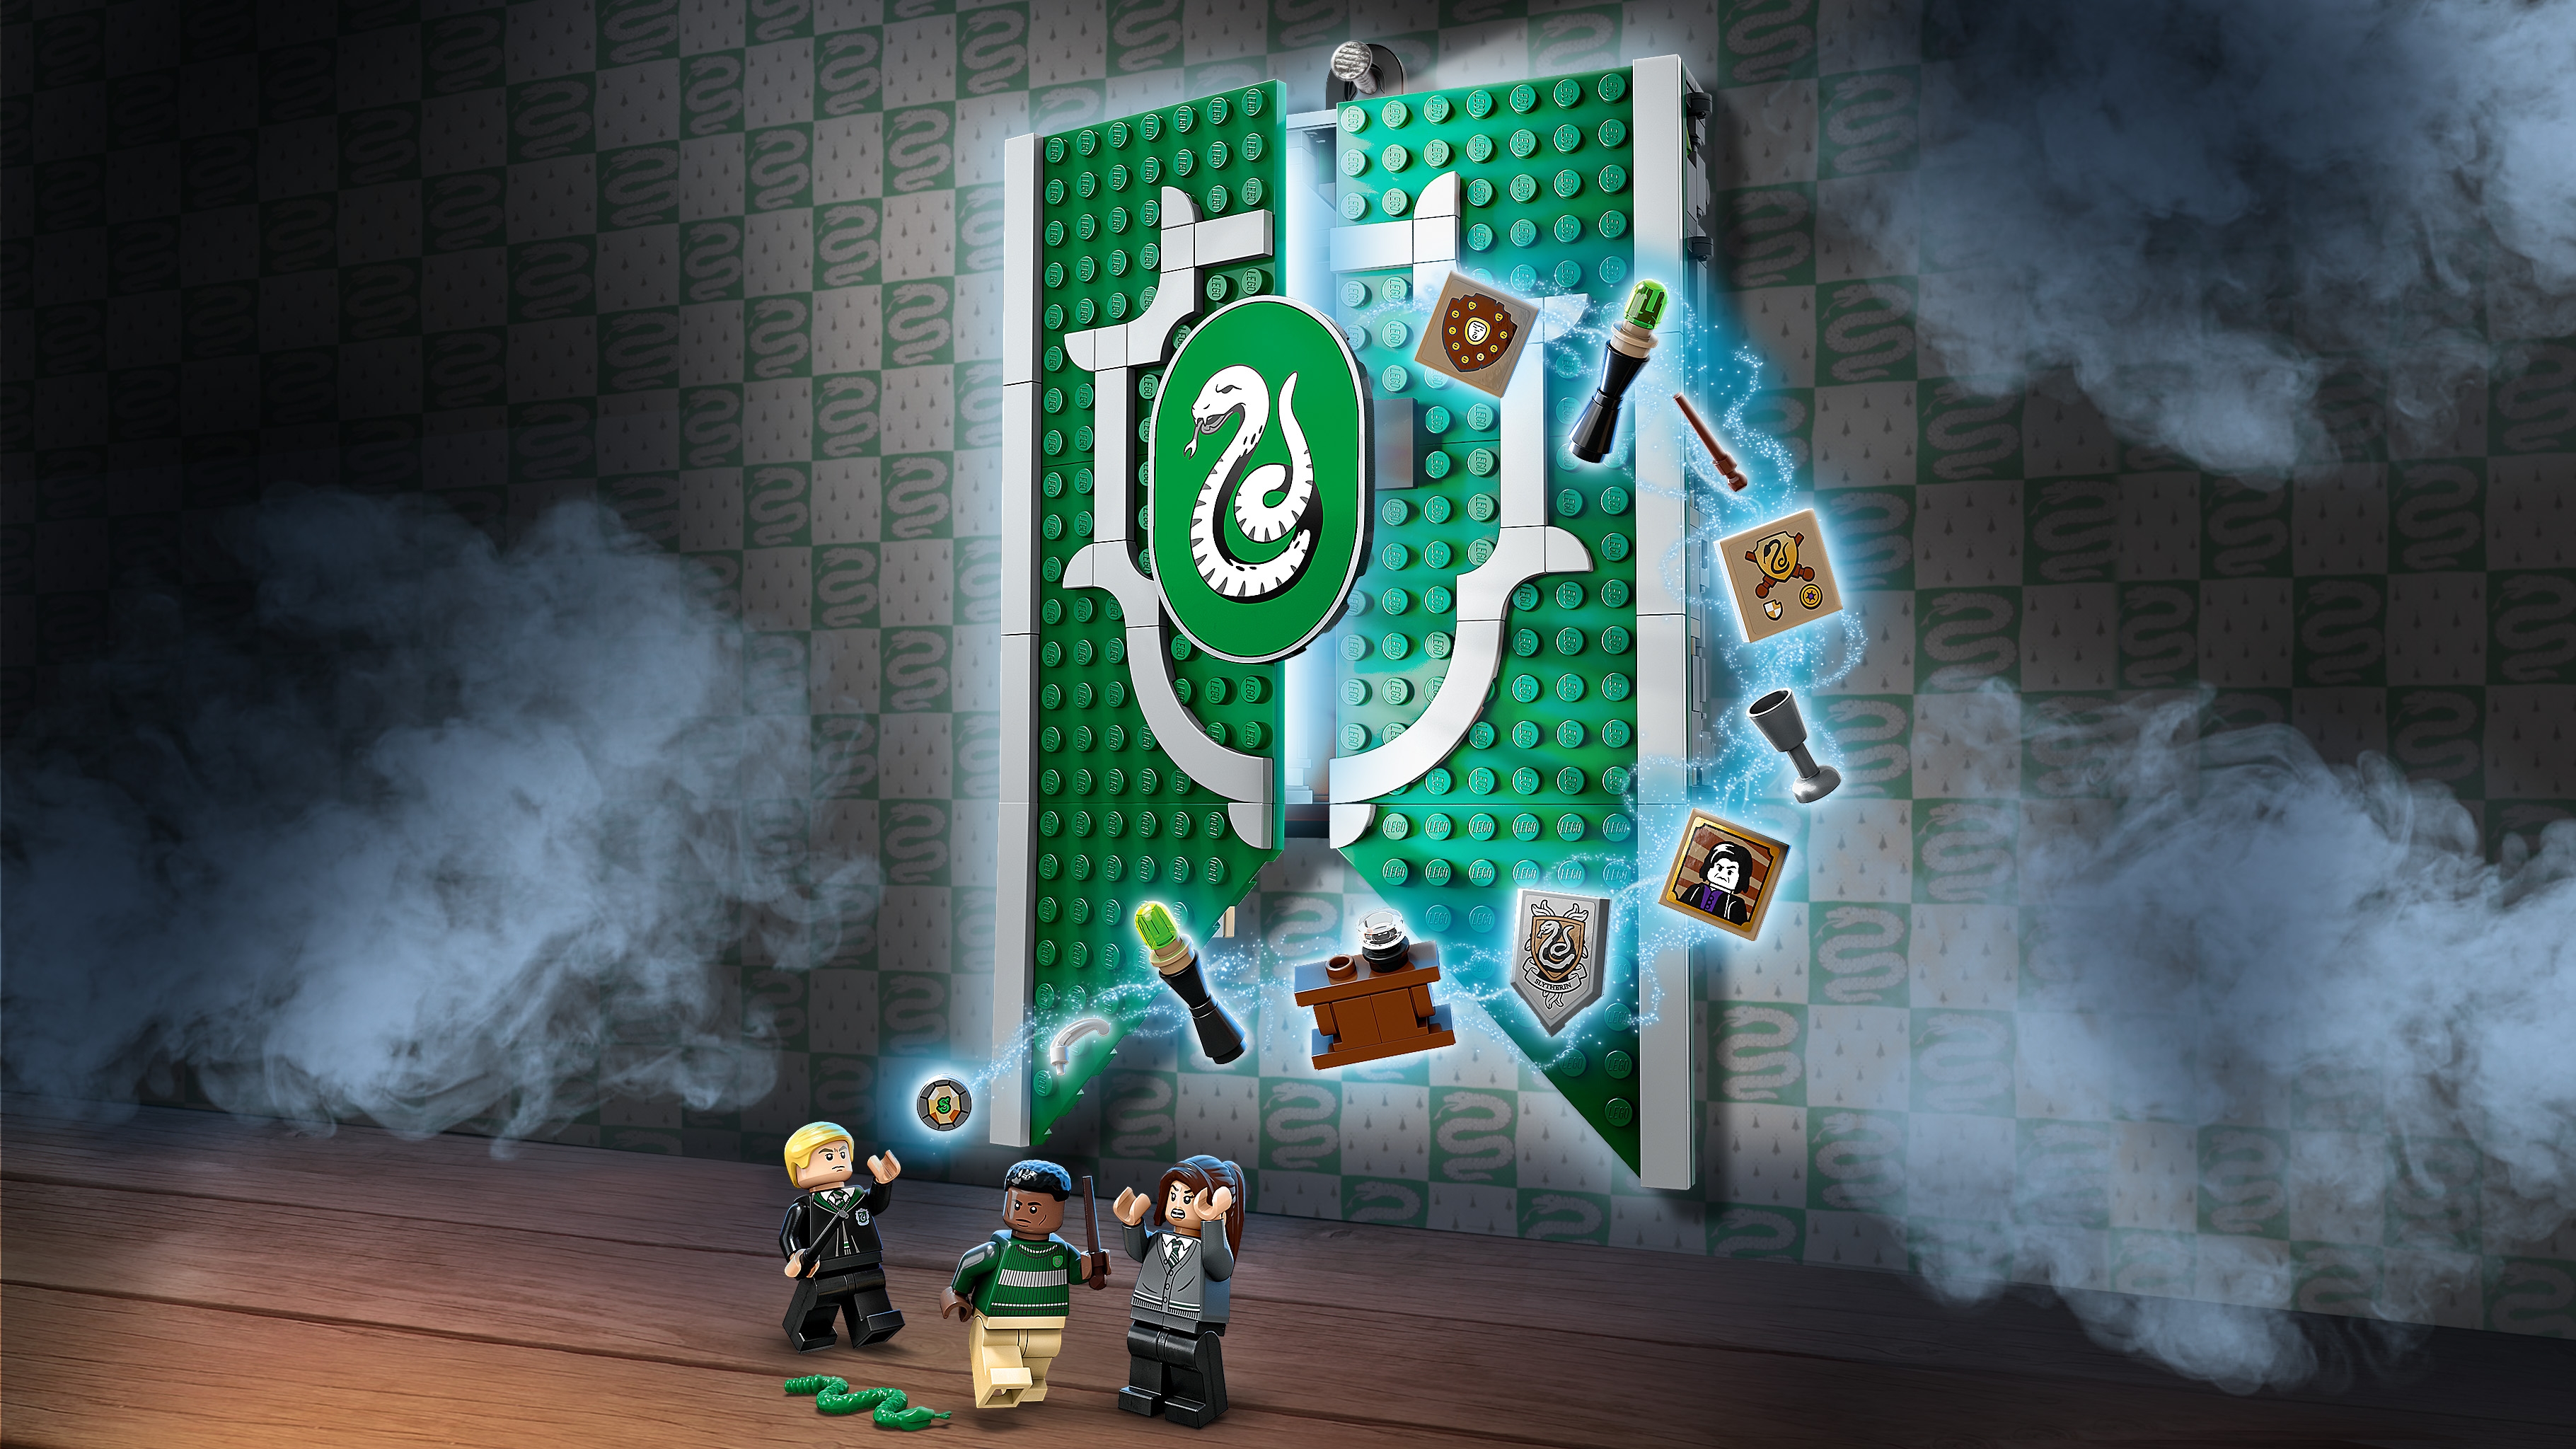 LEGO Harry Potter Slytherin House Banner • Set 76410 • SetDB